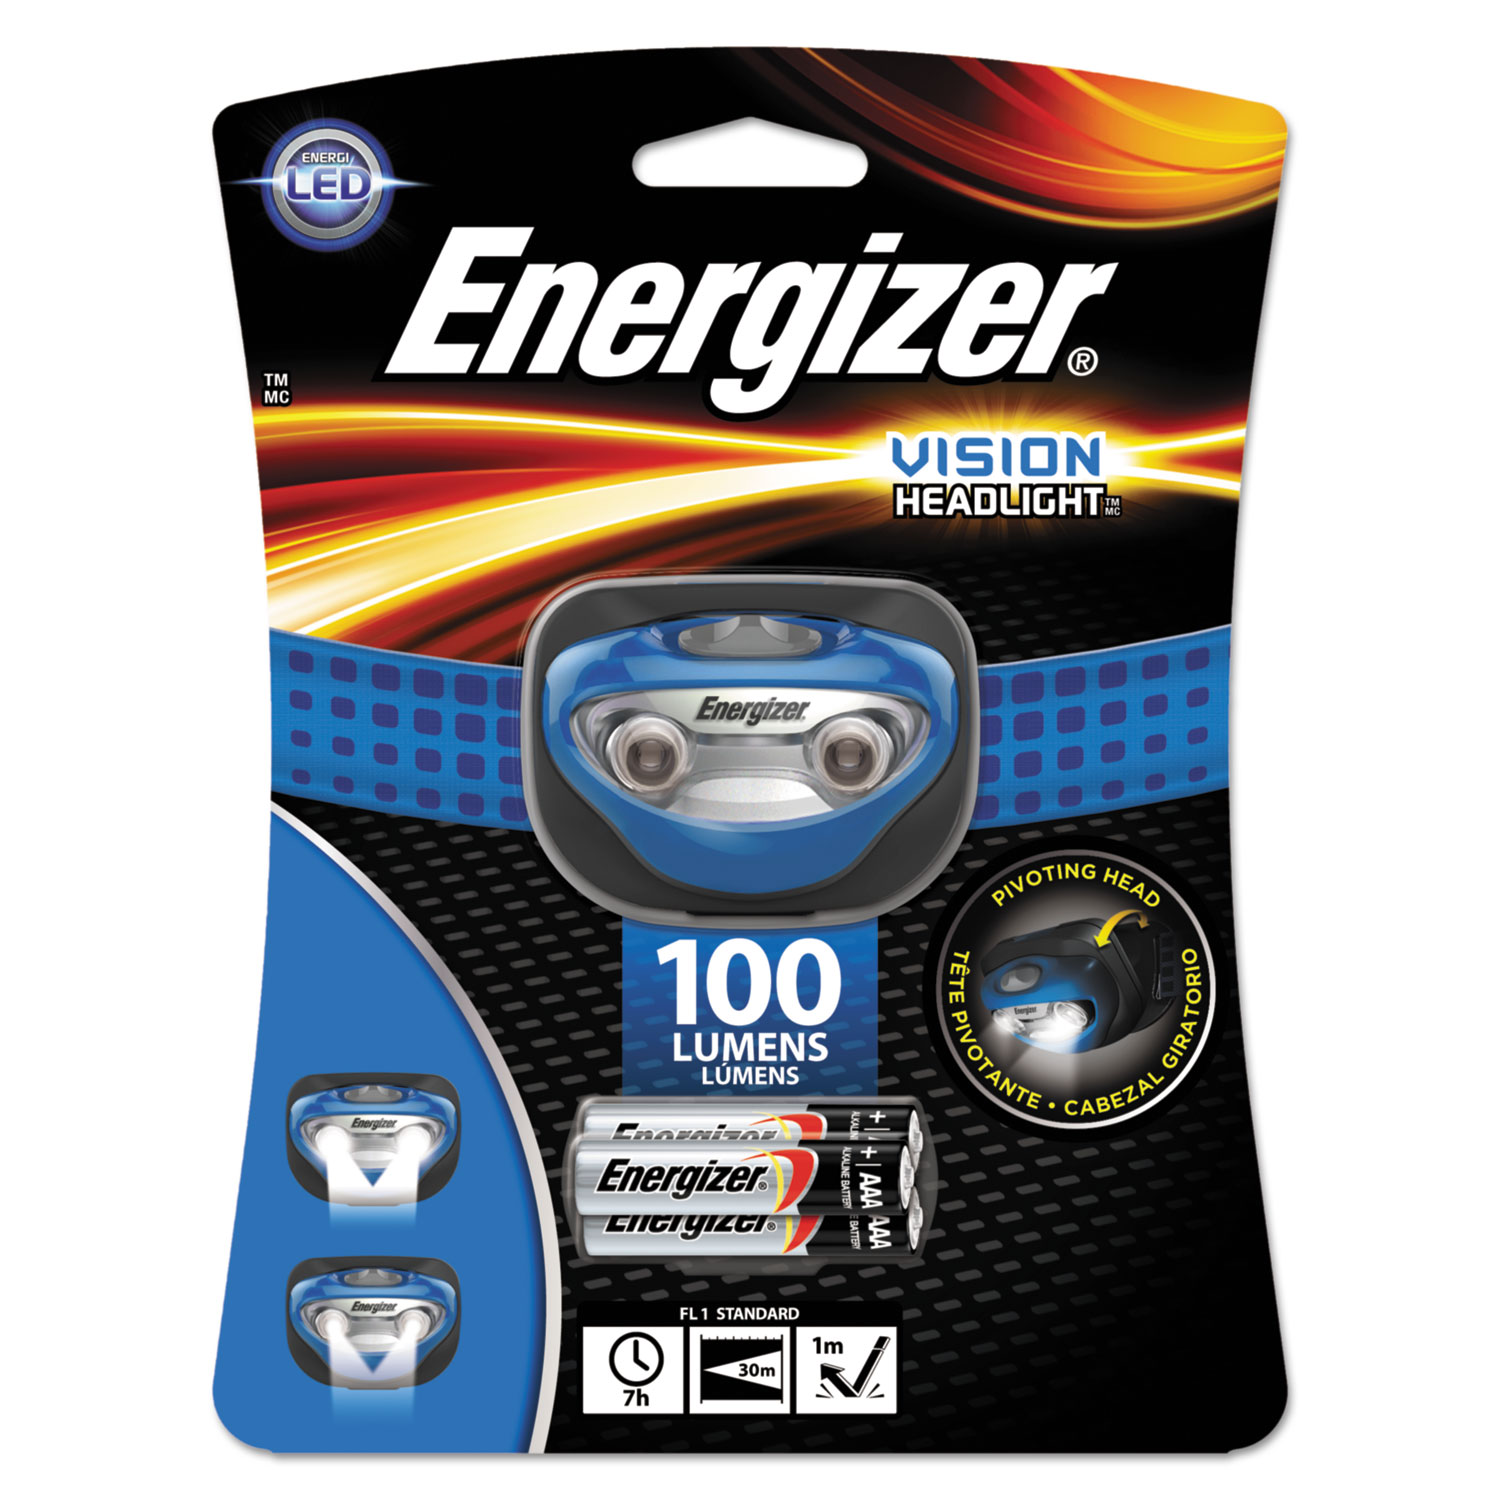  Energizer HDA32E LED Headlight, 3 AAA Batteries (Included), Blue (EVEHDA32E) 